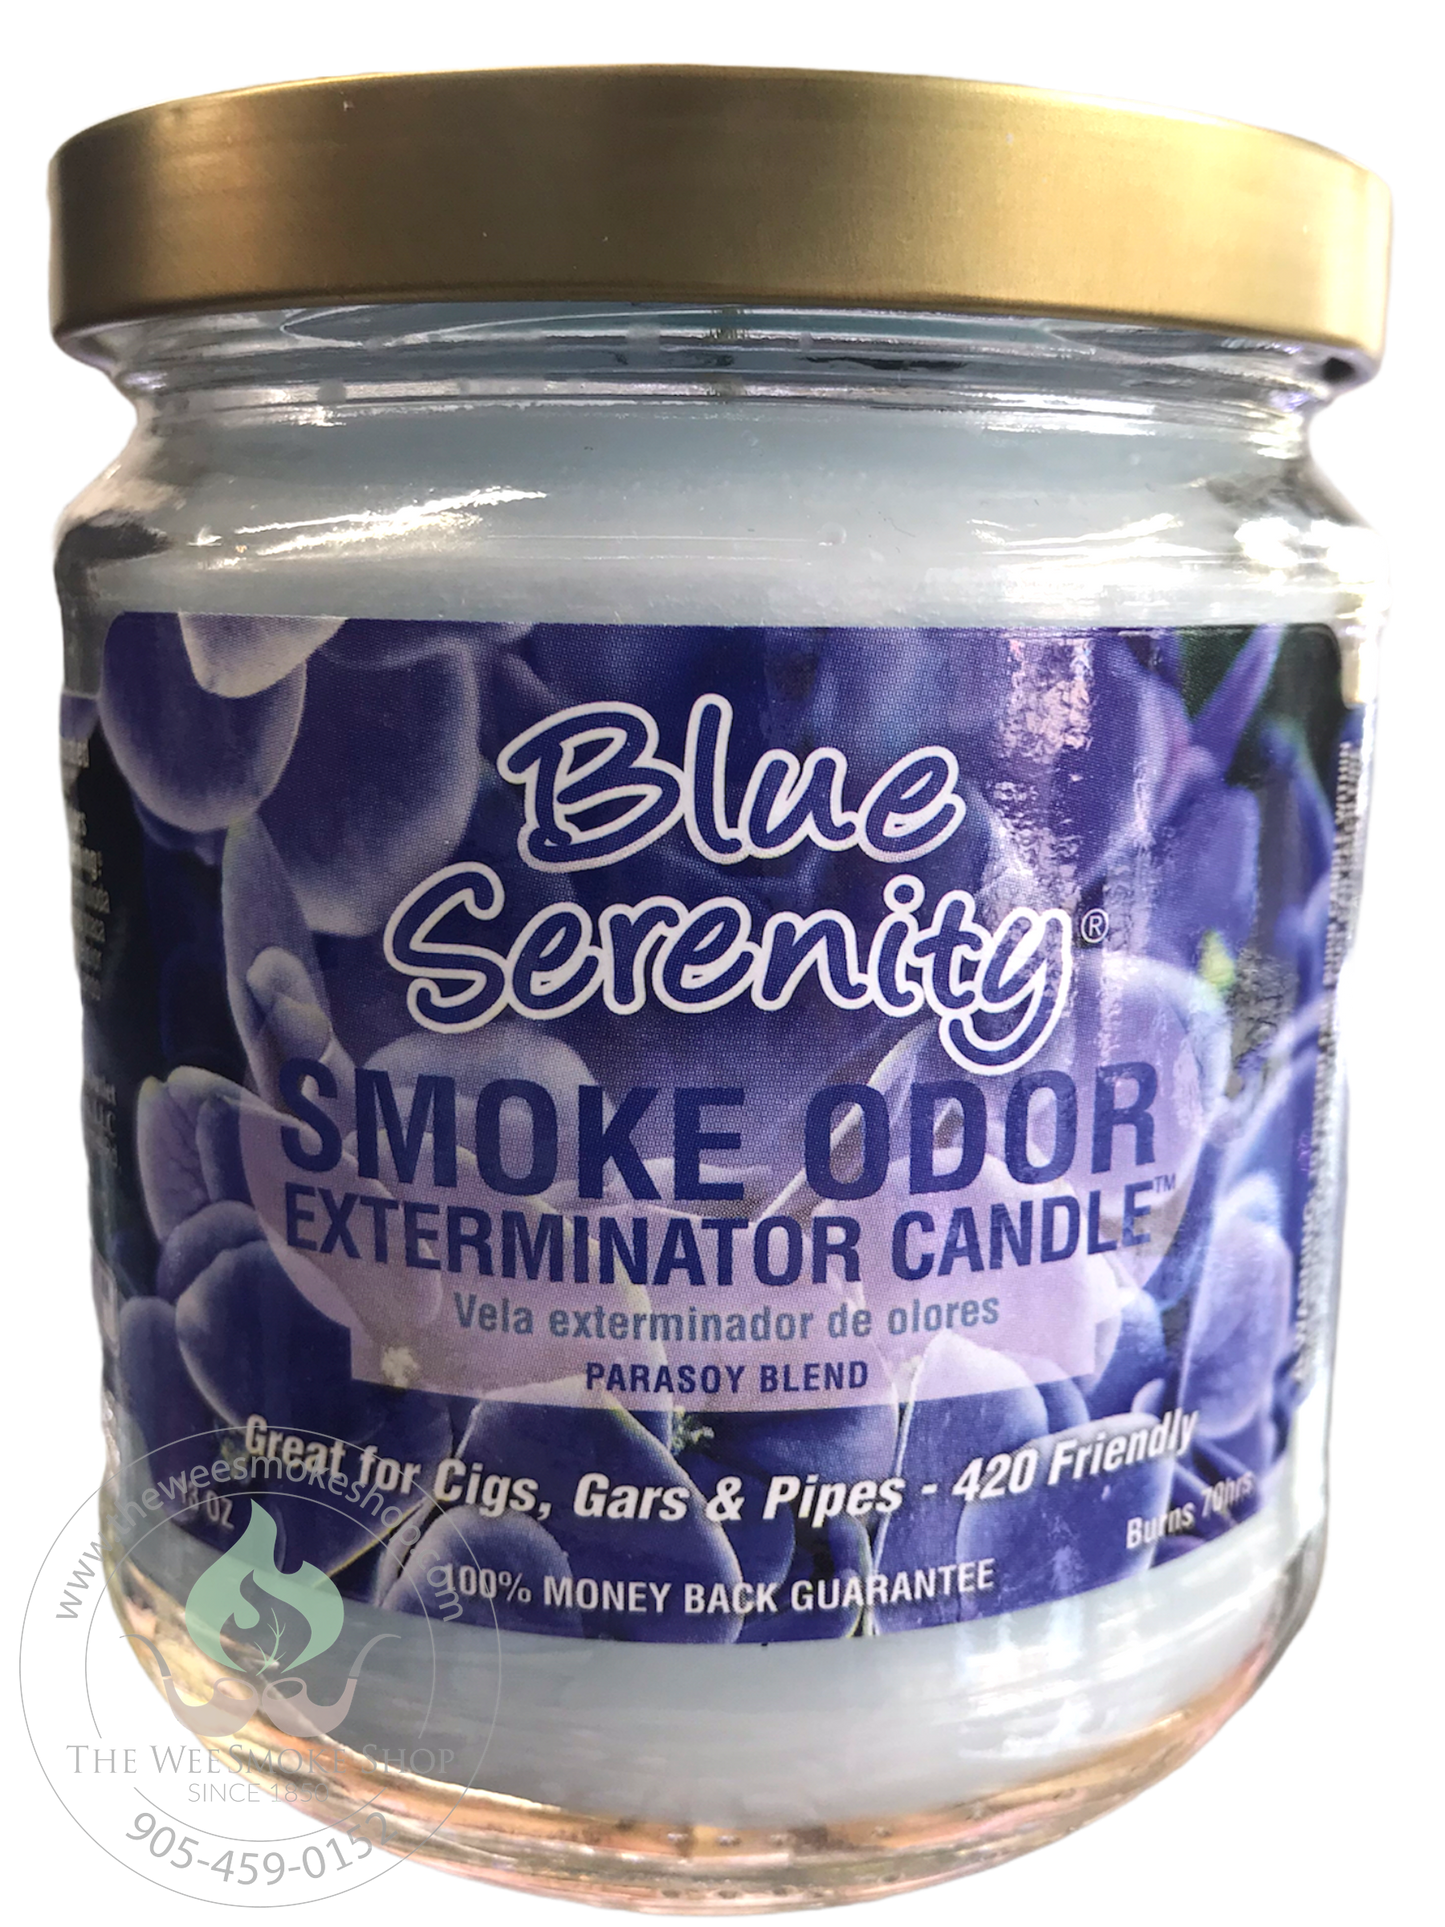 Blue Serenity Smoke Odor Exterminator Candle - Wee Smoke Shop